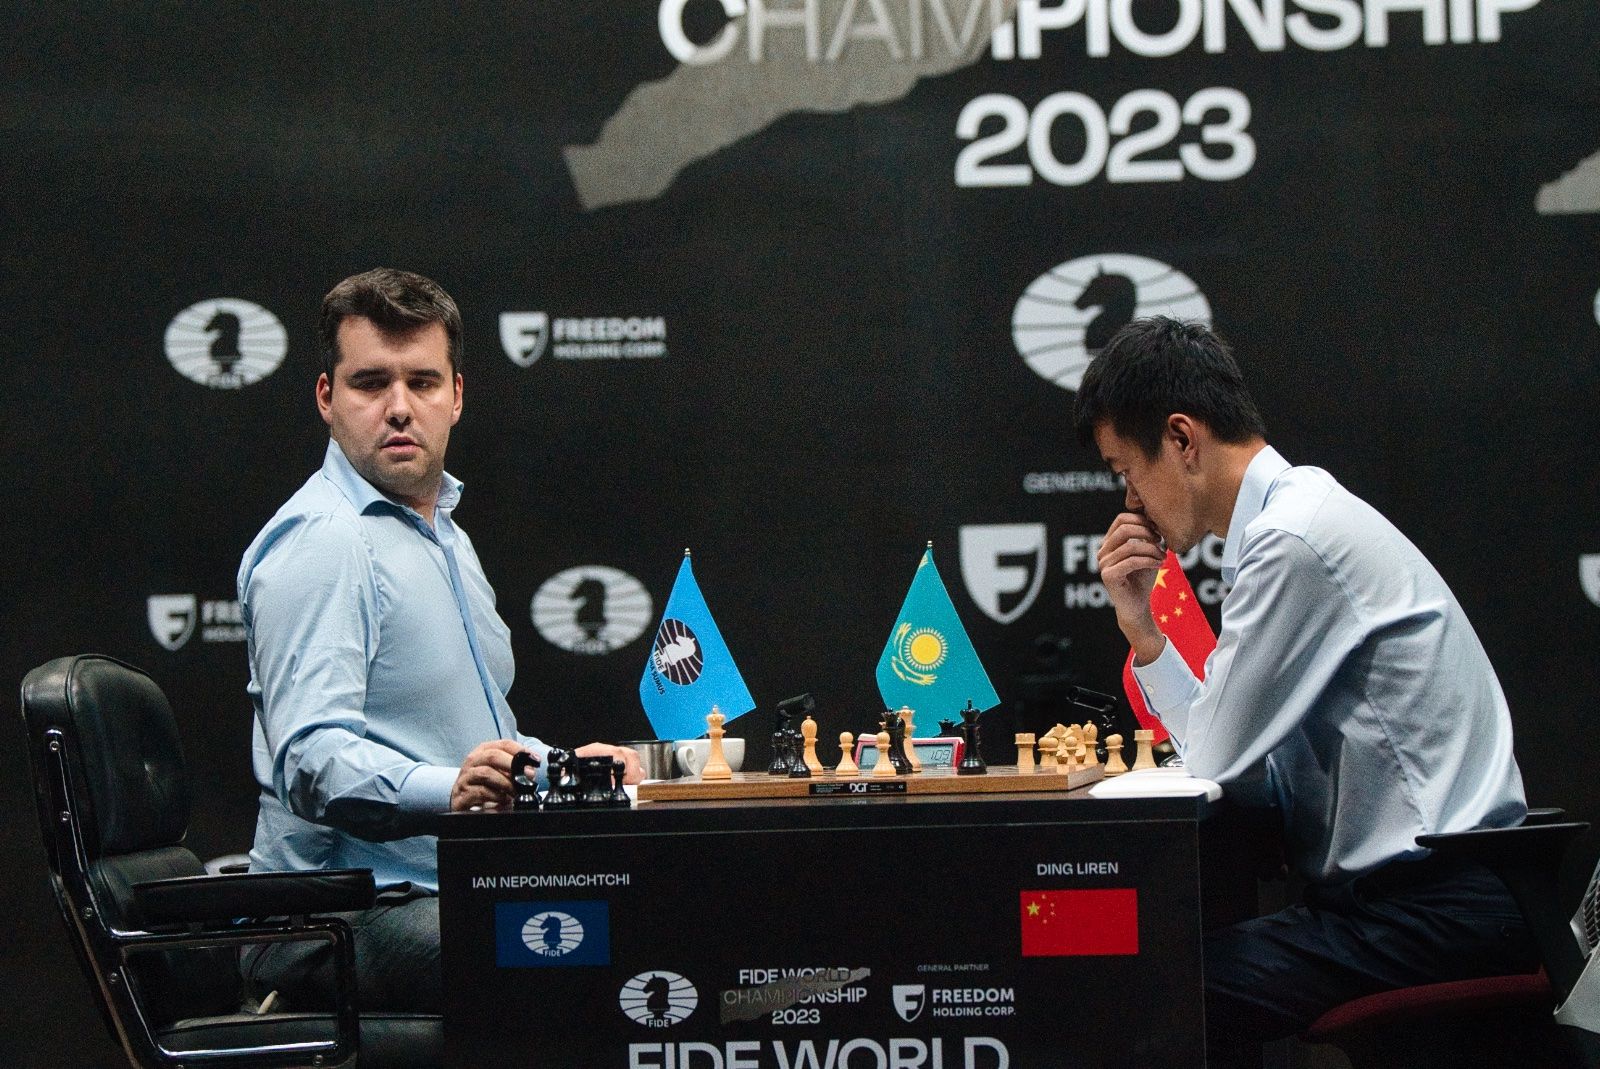 Two tournament triumphs of Alekhine